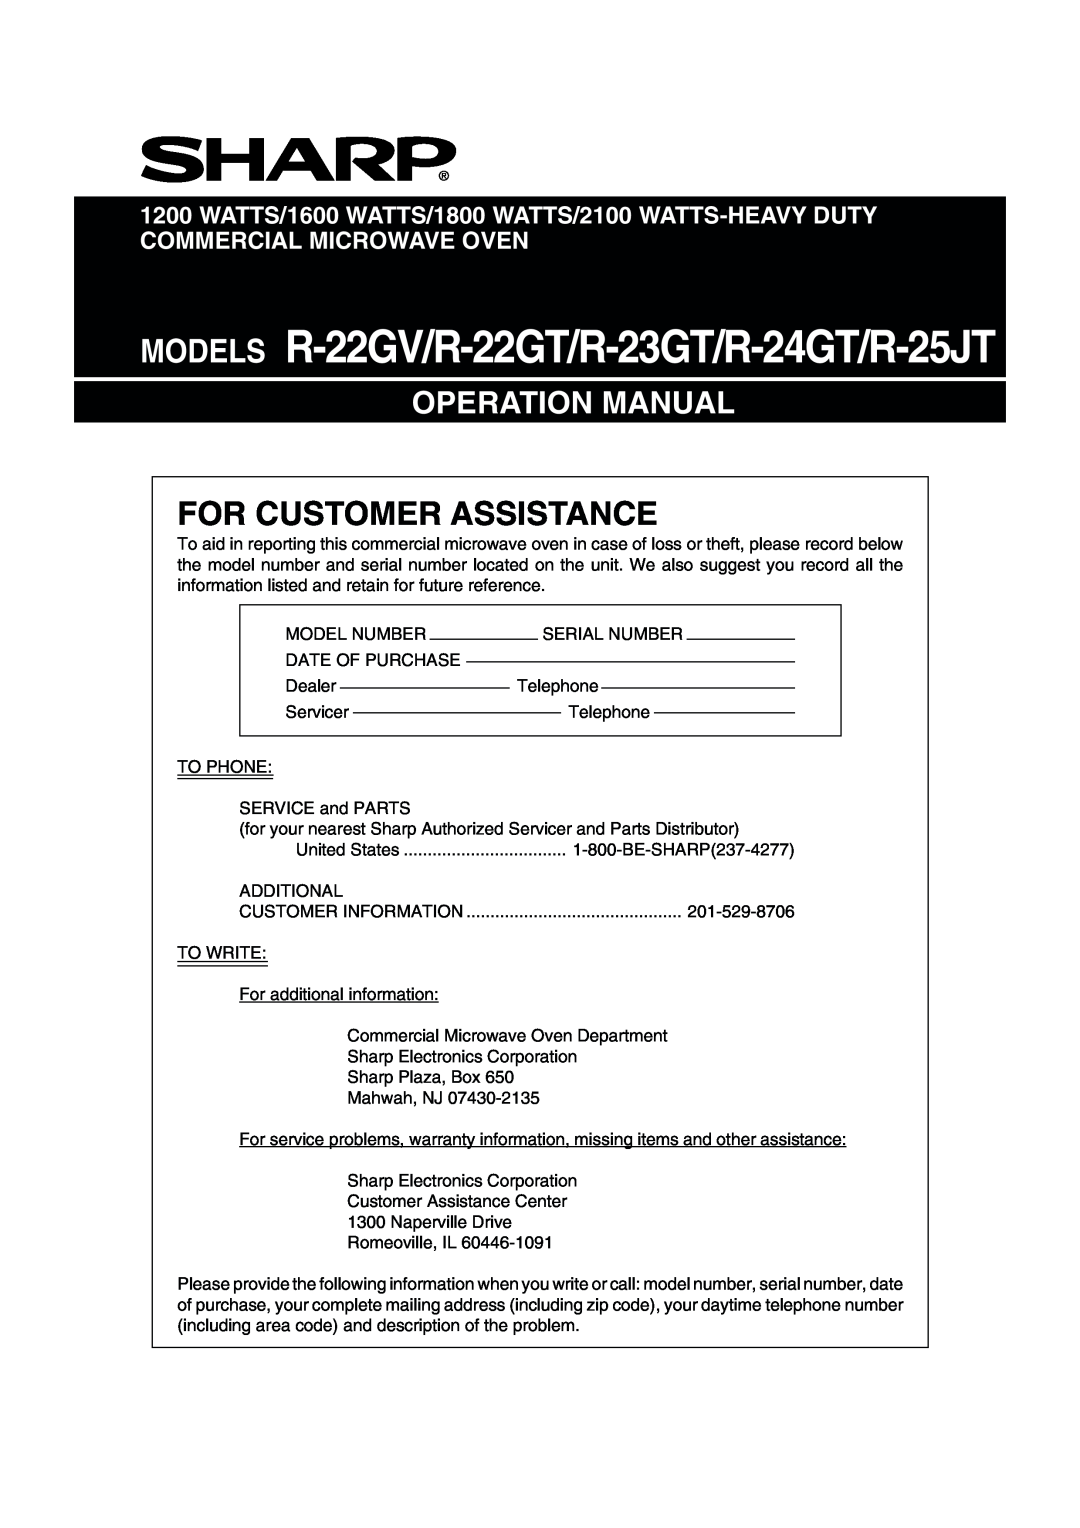 Sharp operation manual MODELS R-22GV/R-22GT/R-23GT/R-24GT/R-25JT, For Customer Assistance 